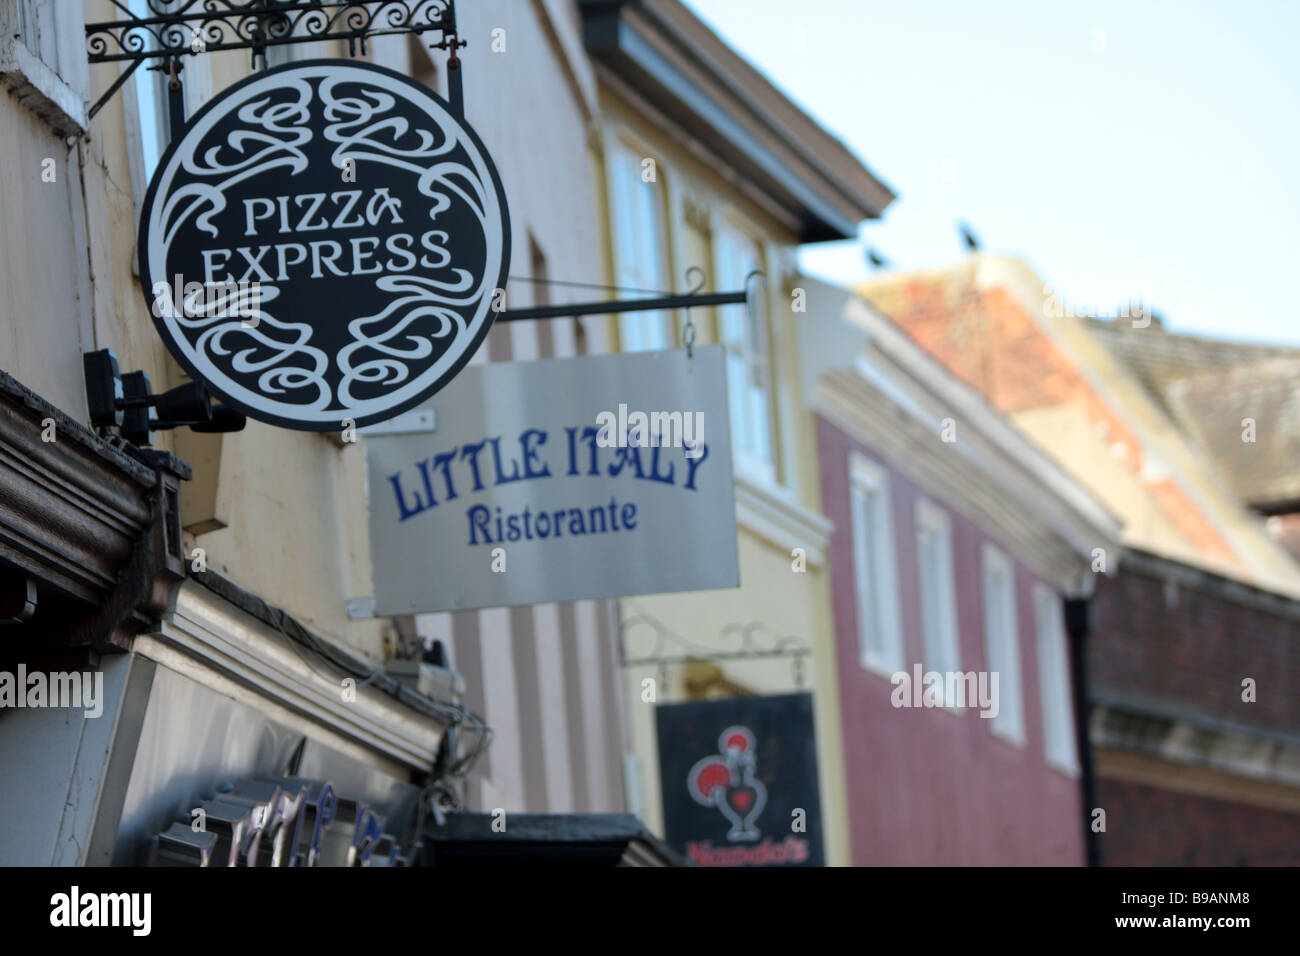 Pizza express, Nandos, "little Italy" Schilder in Windsor High street Stockfoto